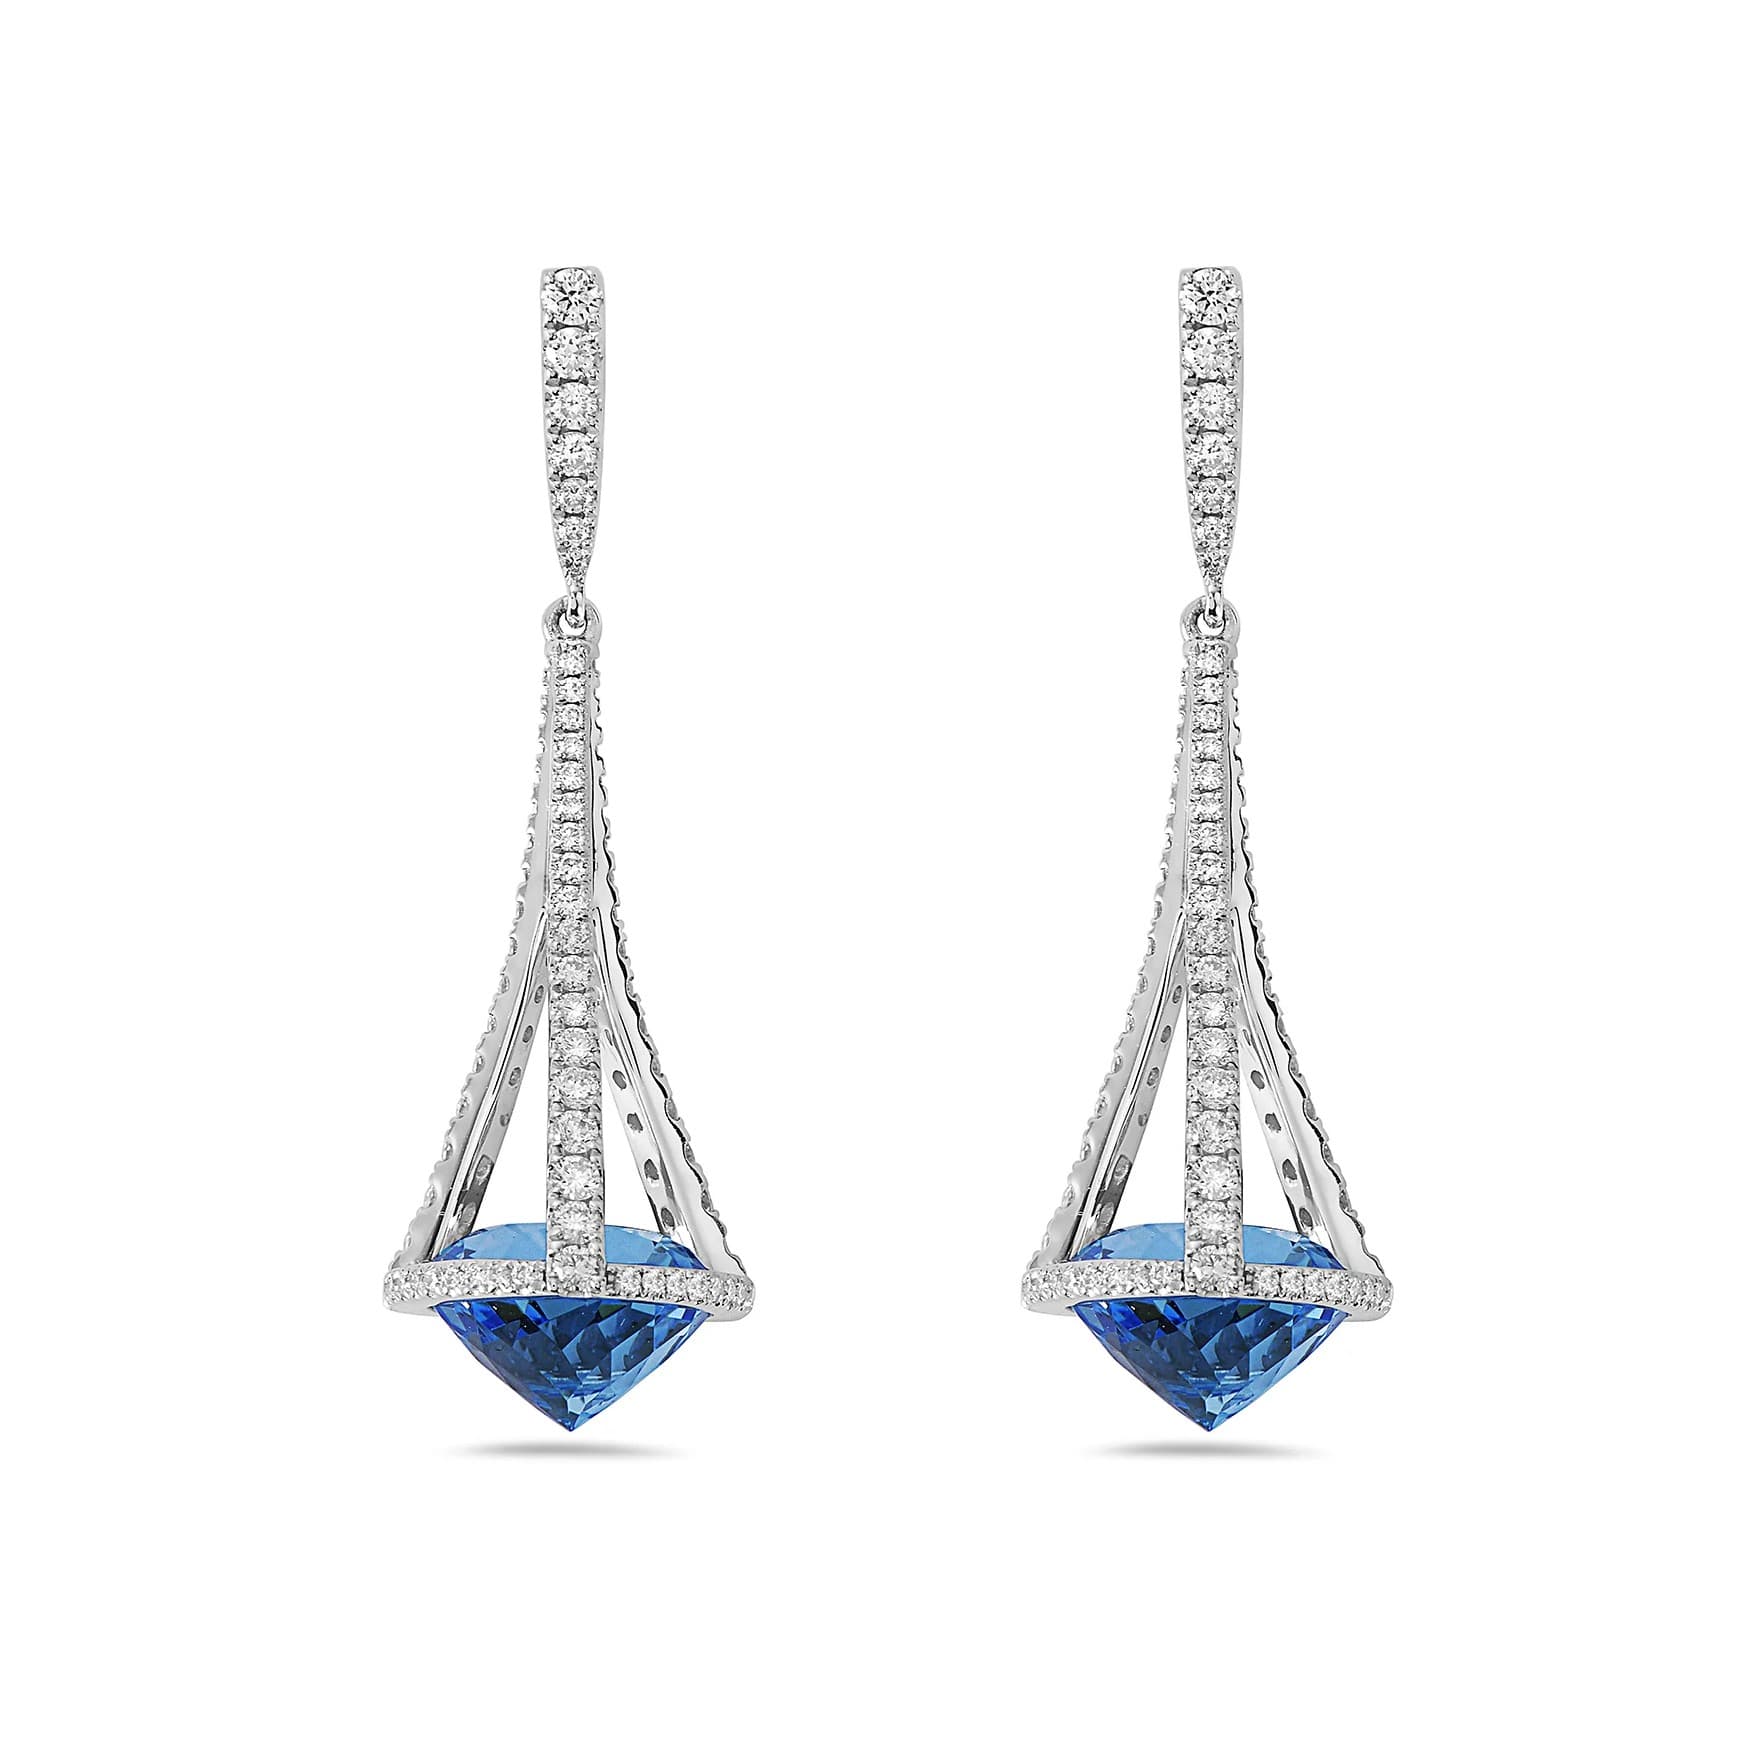 Charles Krypell London Blue Topaz and Diamond Chandelier Earrings